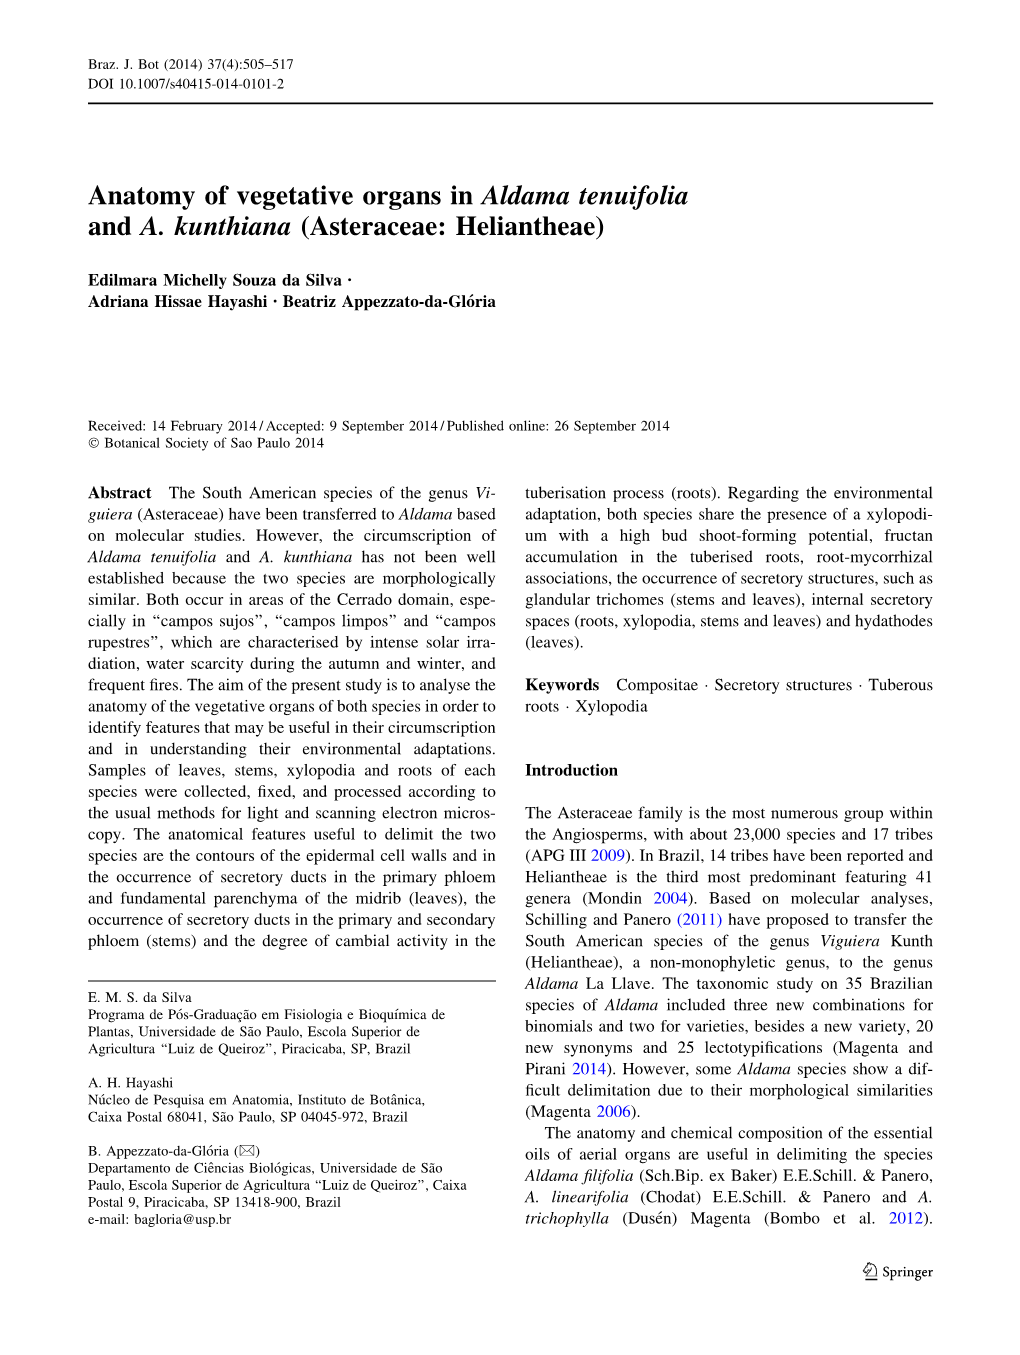 Anatomy of Vegetative Organs in Aldama Tenuifolia and A. Kunthiana (Asteraceae: Heliantheae)